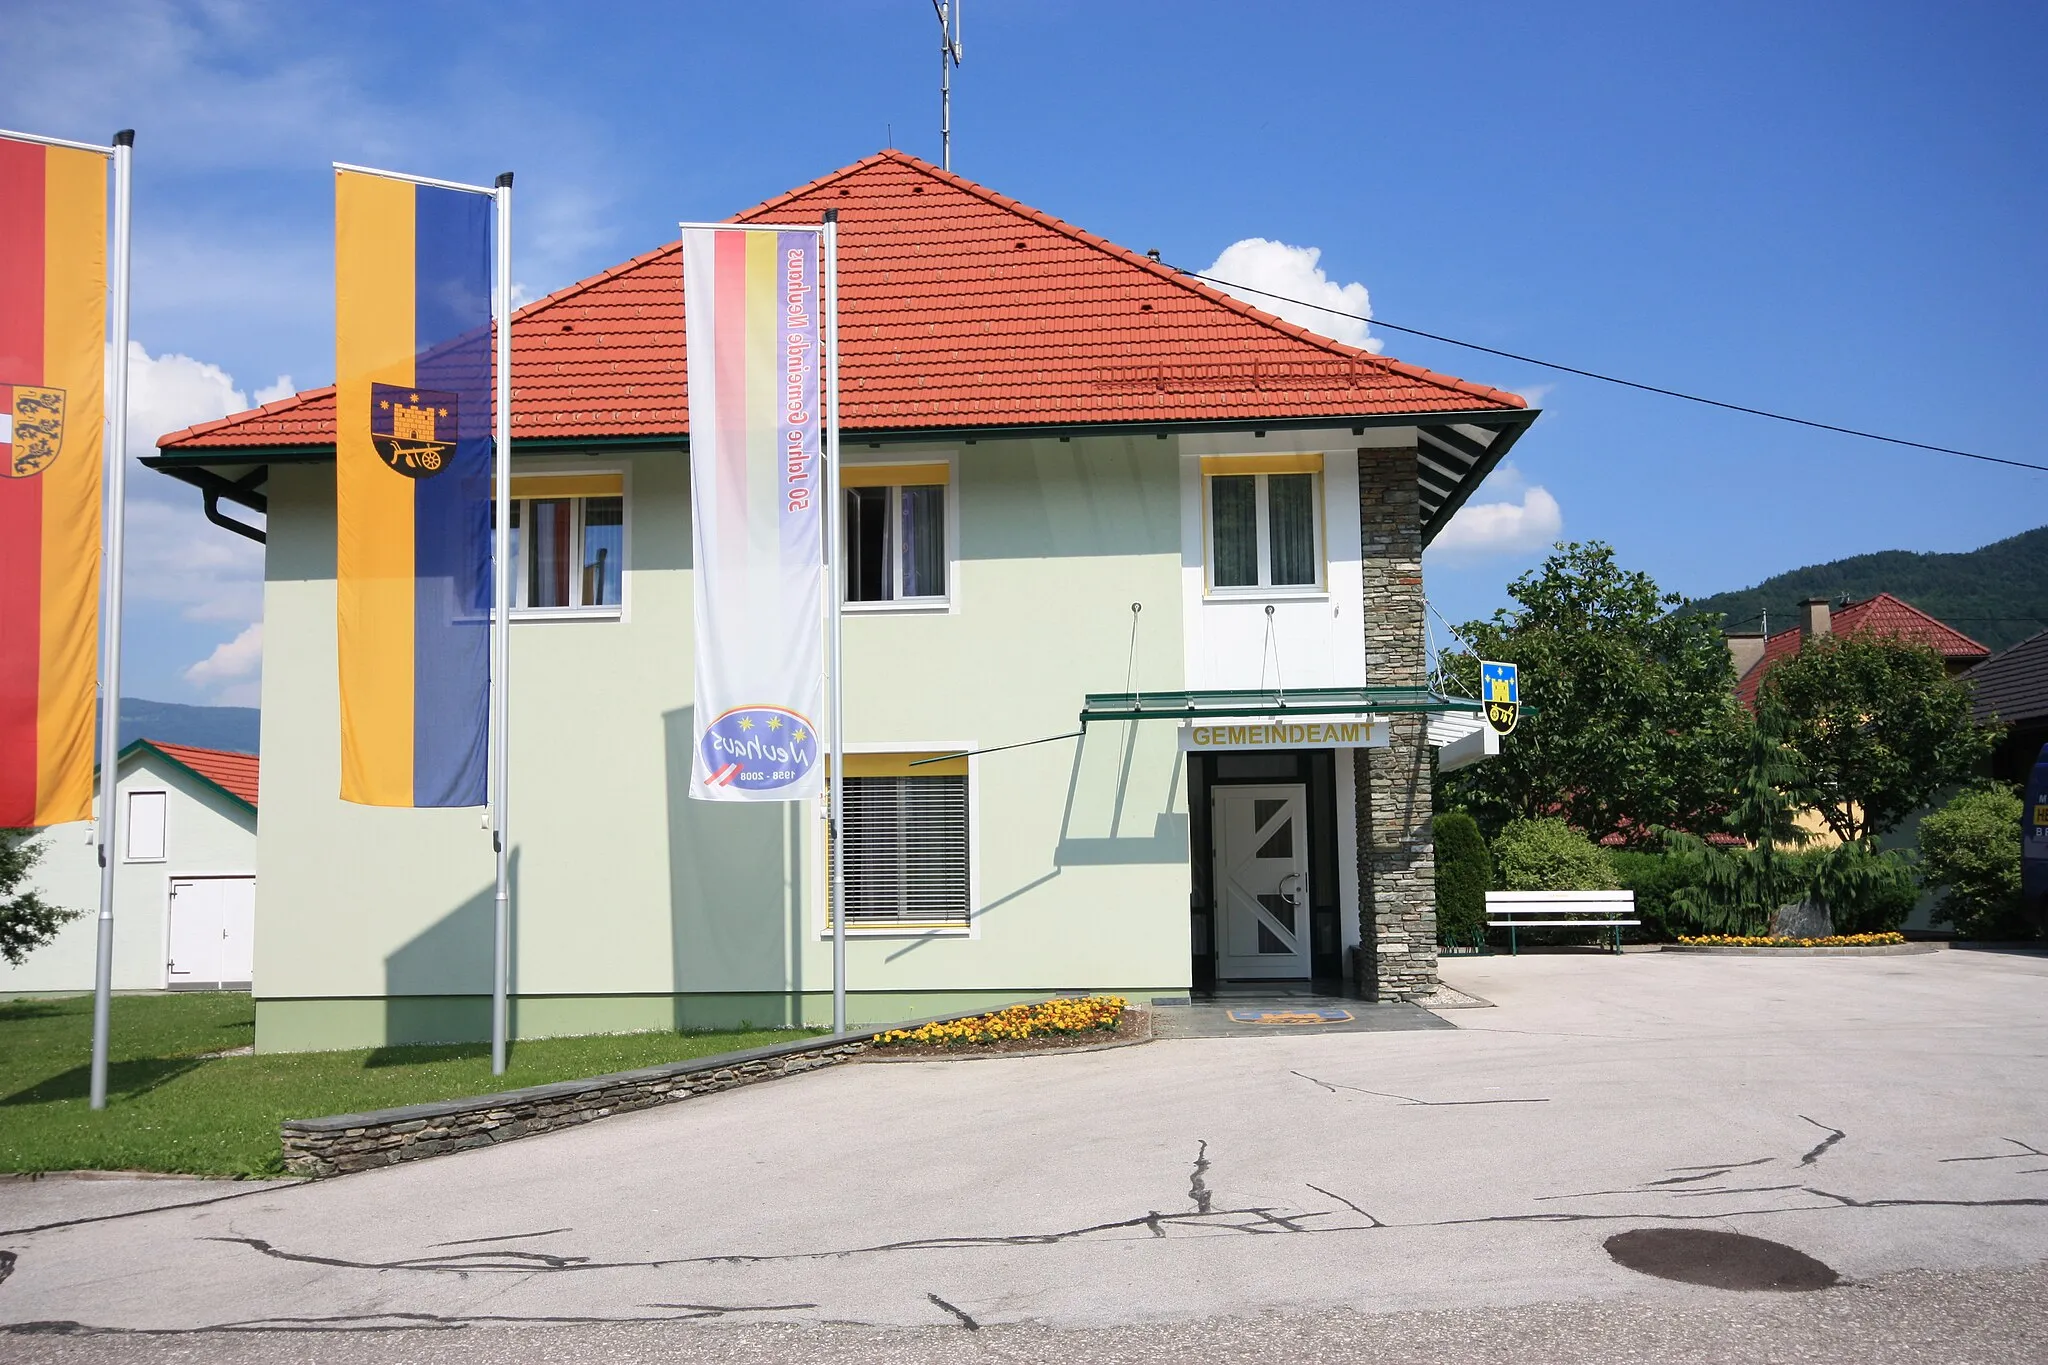 Photo showing: Municipal hall in Neuhaus/Suha, Carinthia